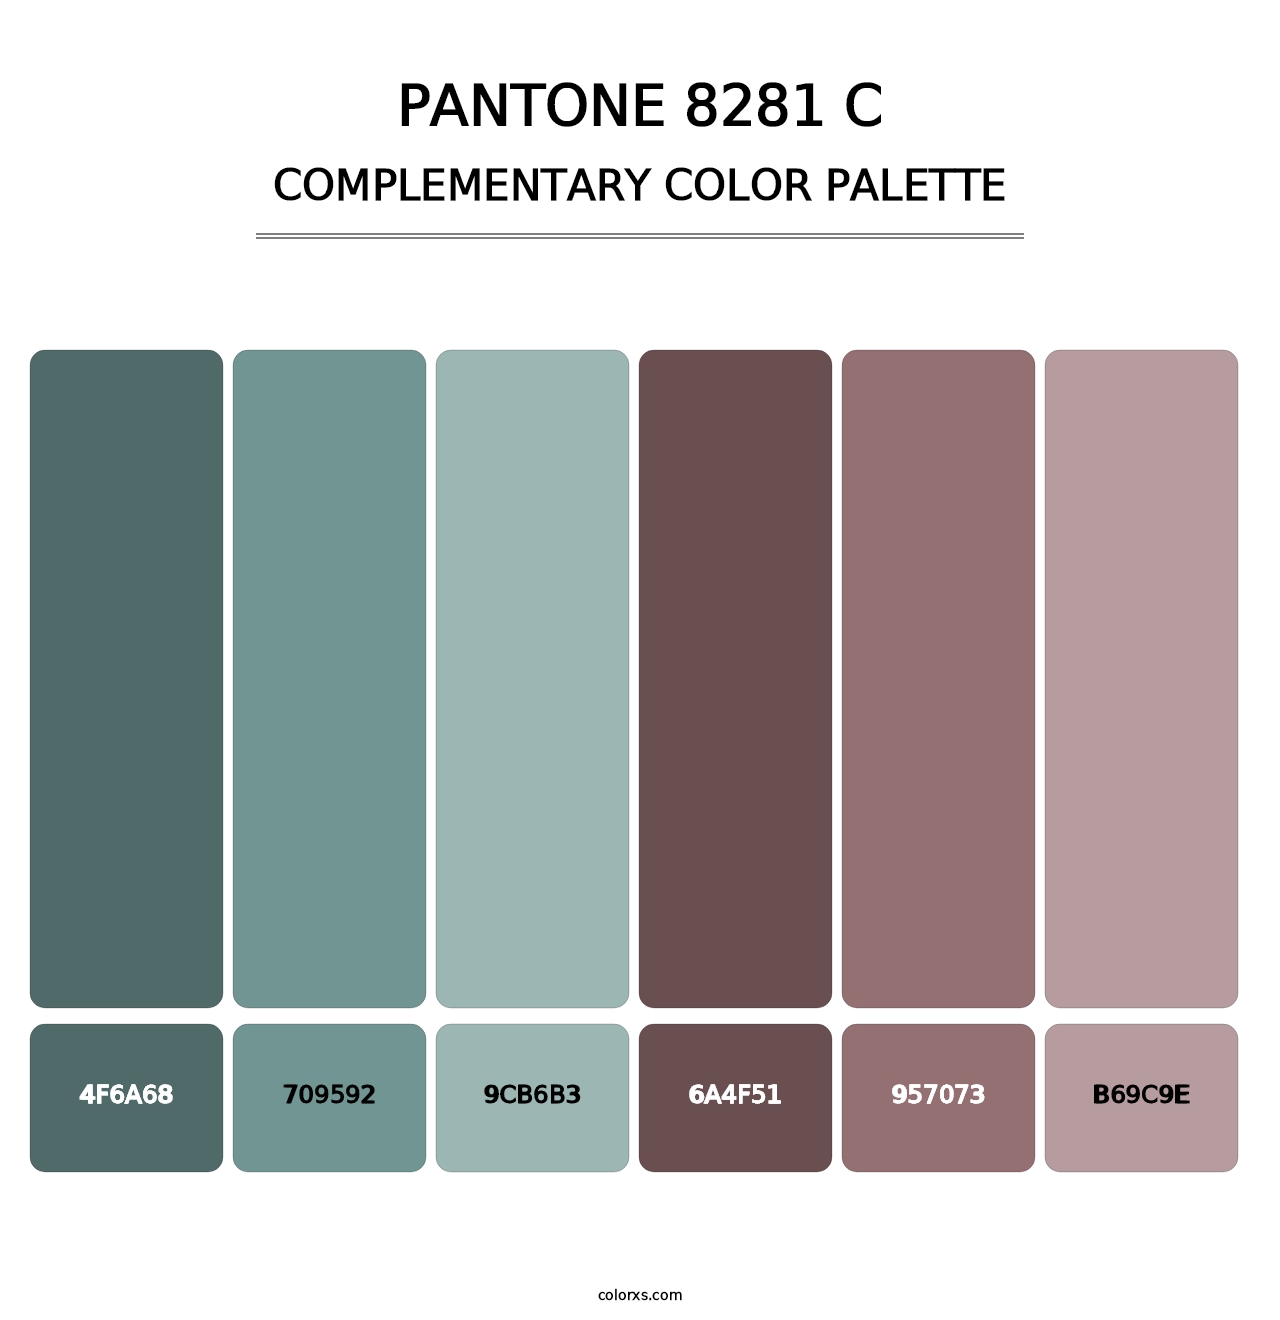 PANTONE 8281 C - Complementary Color Palette